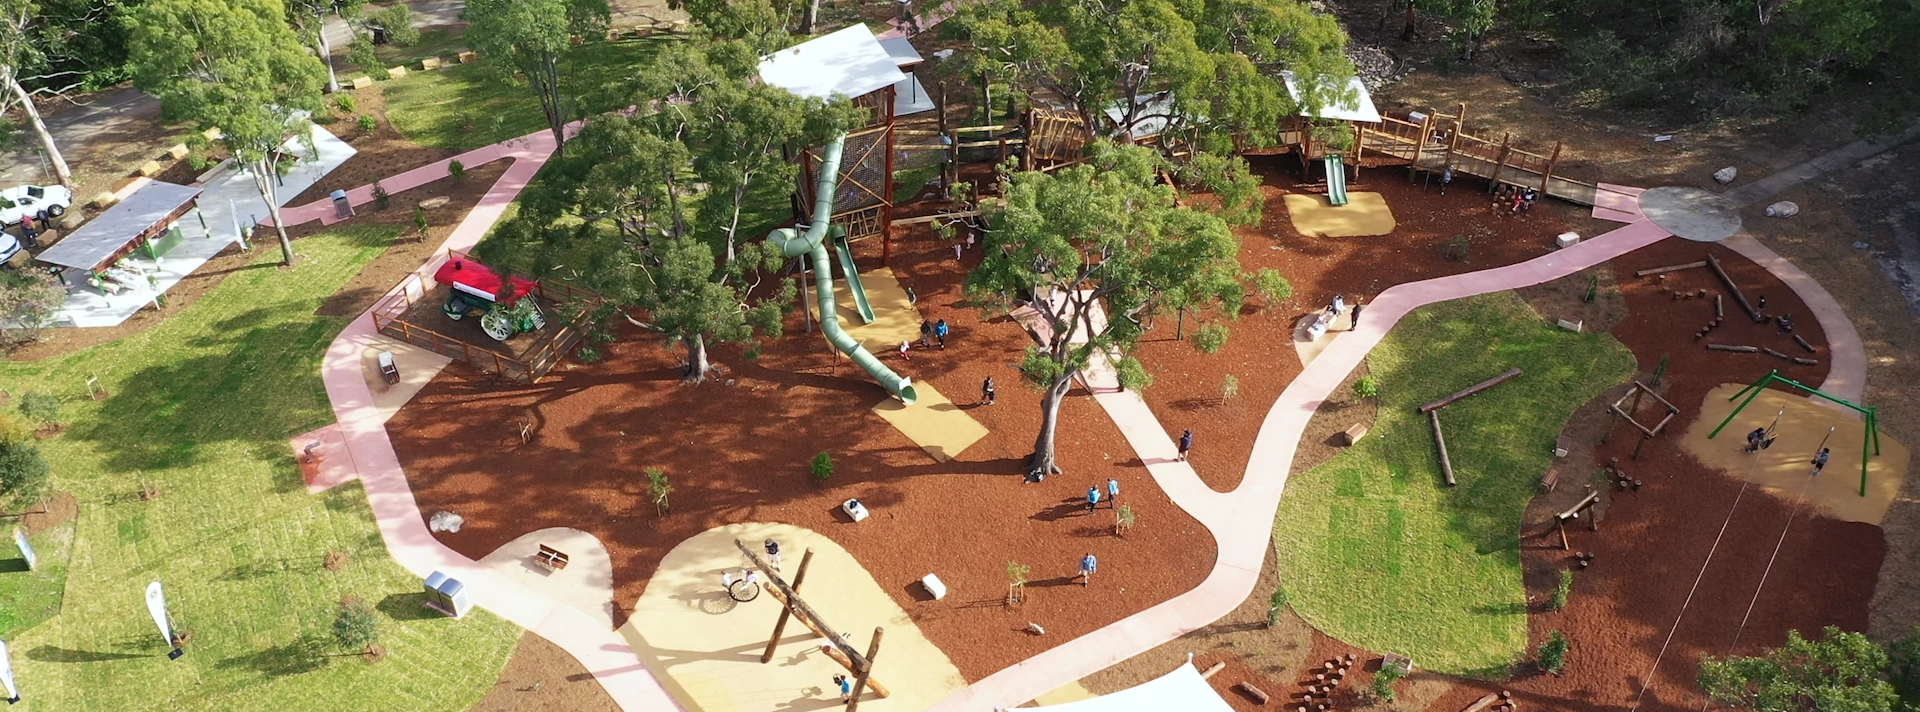 Oatley Bush Park Playground, NSW